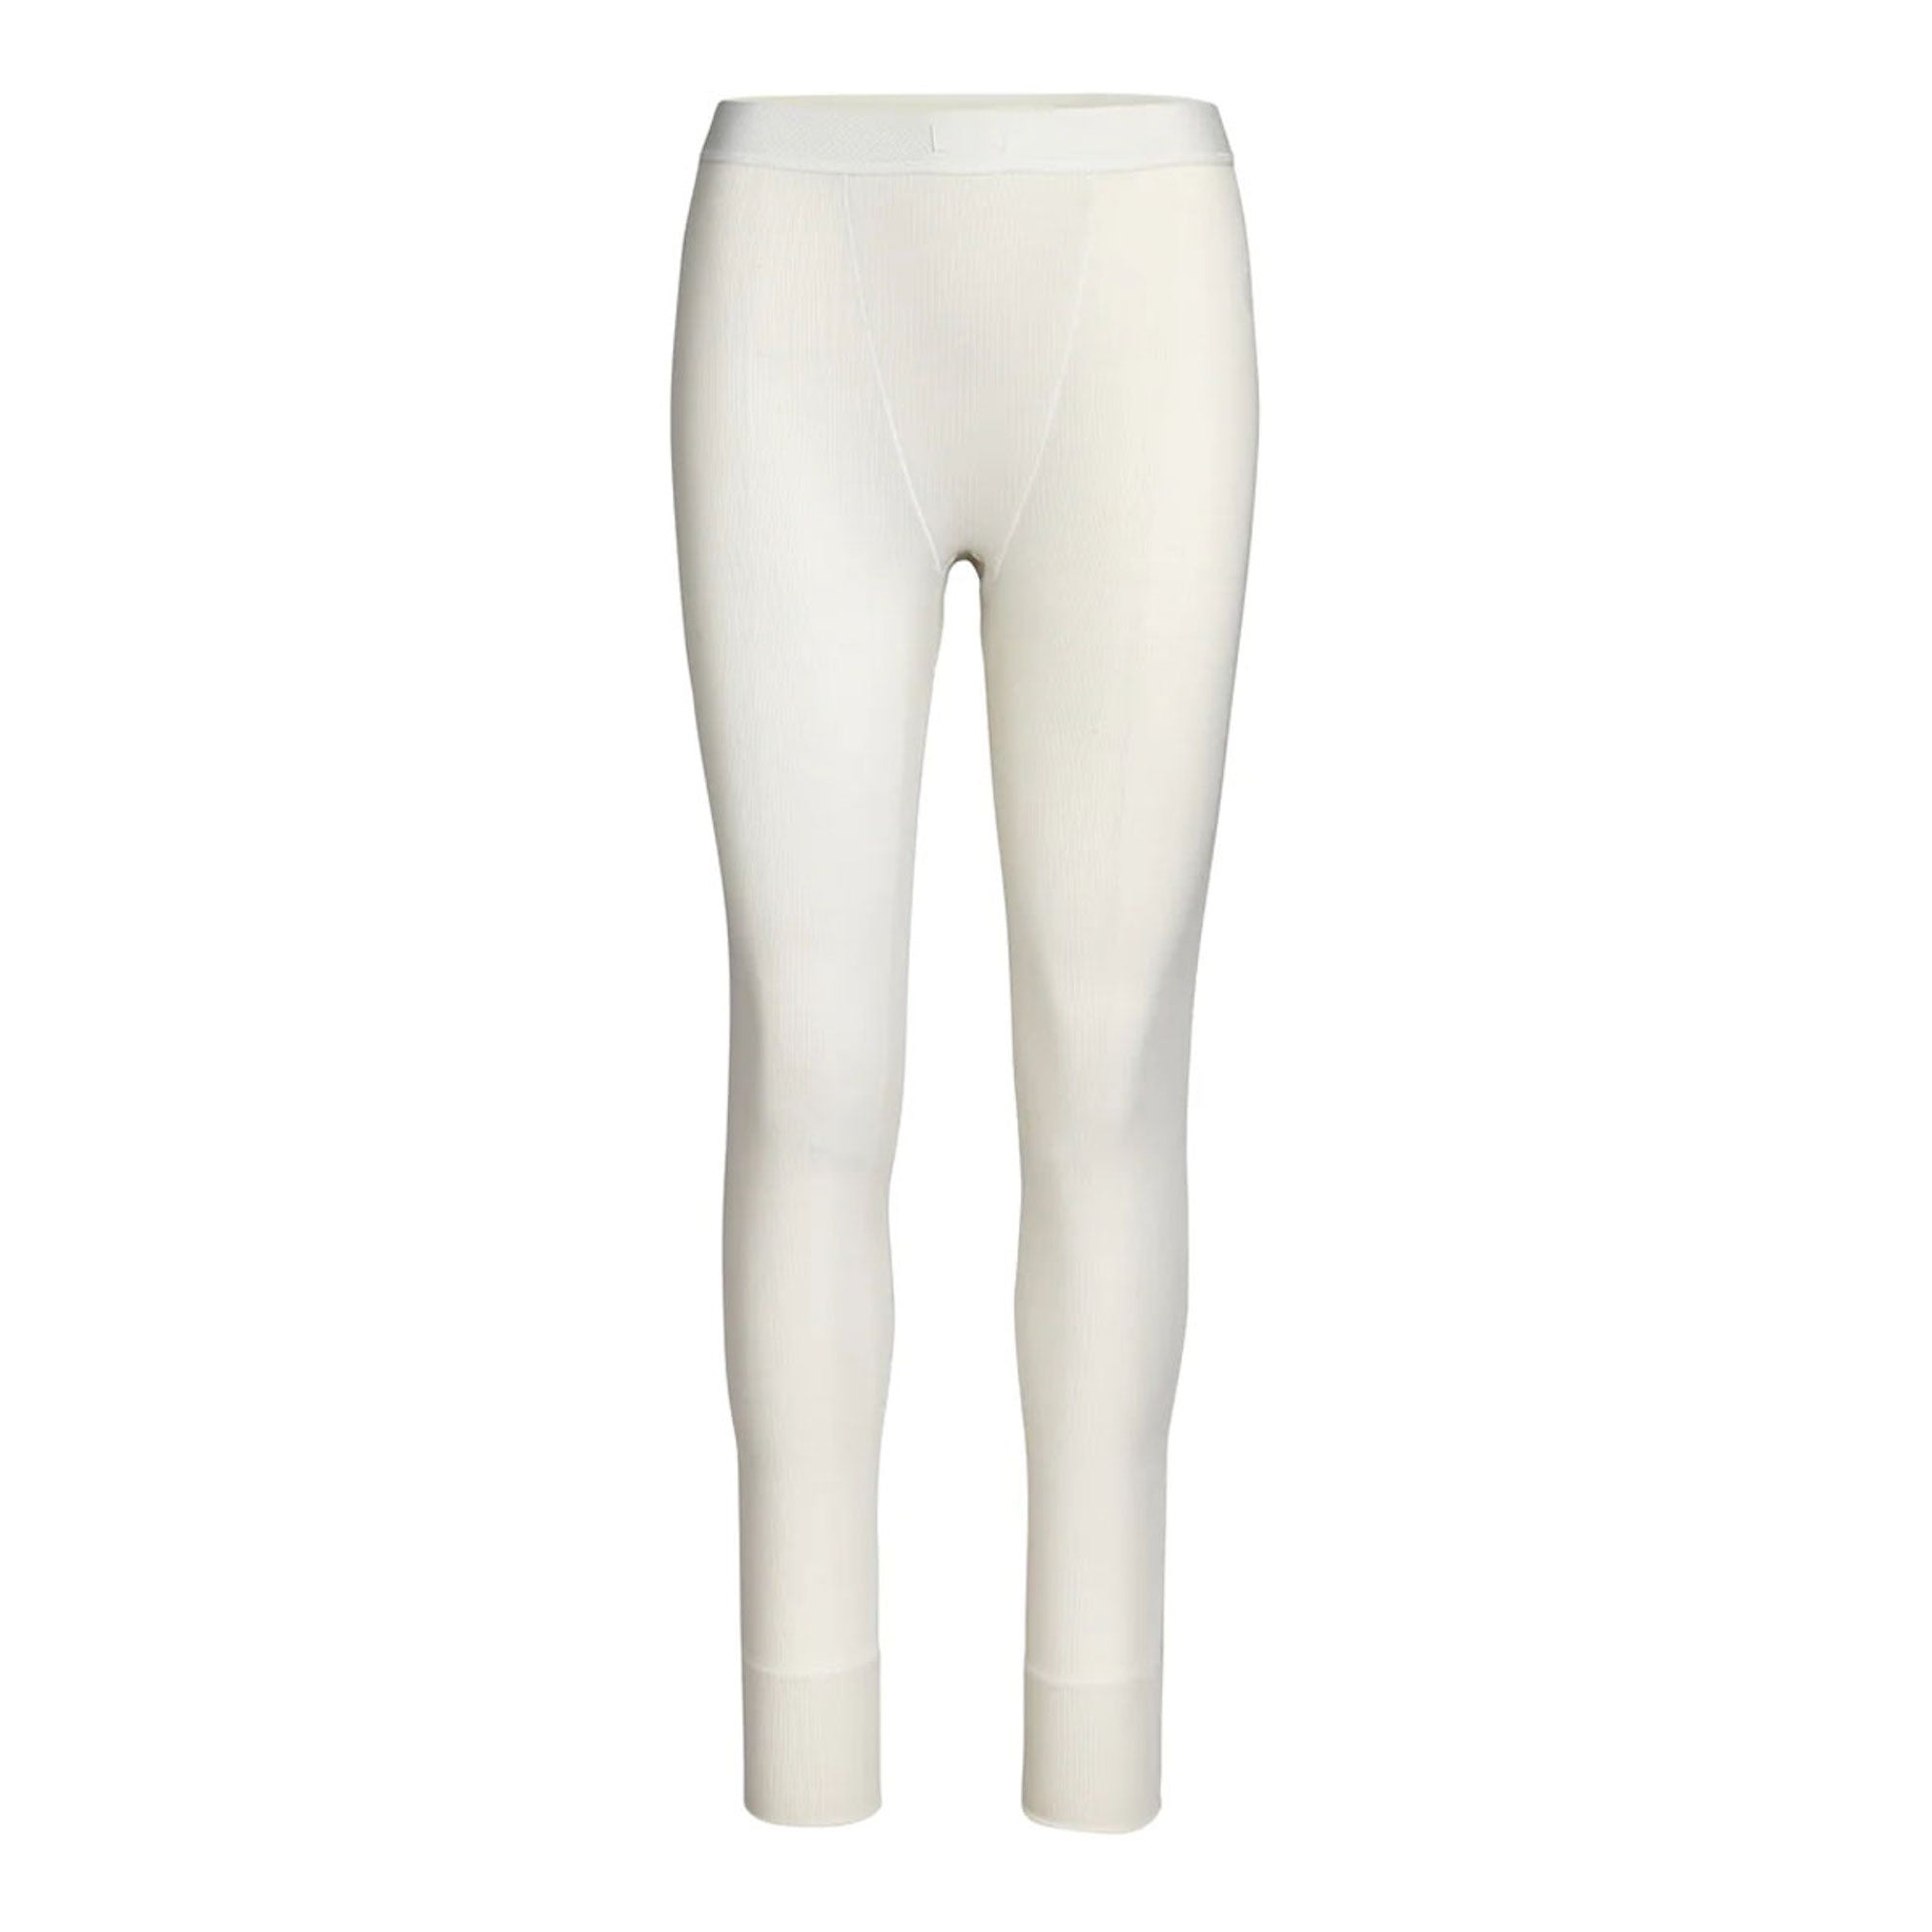 Plain Off White Color Cotton Lycra 4-Way Stretchable Leggings at